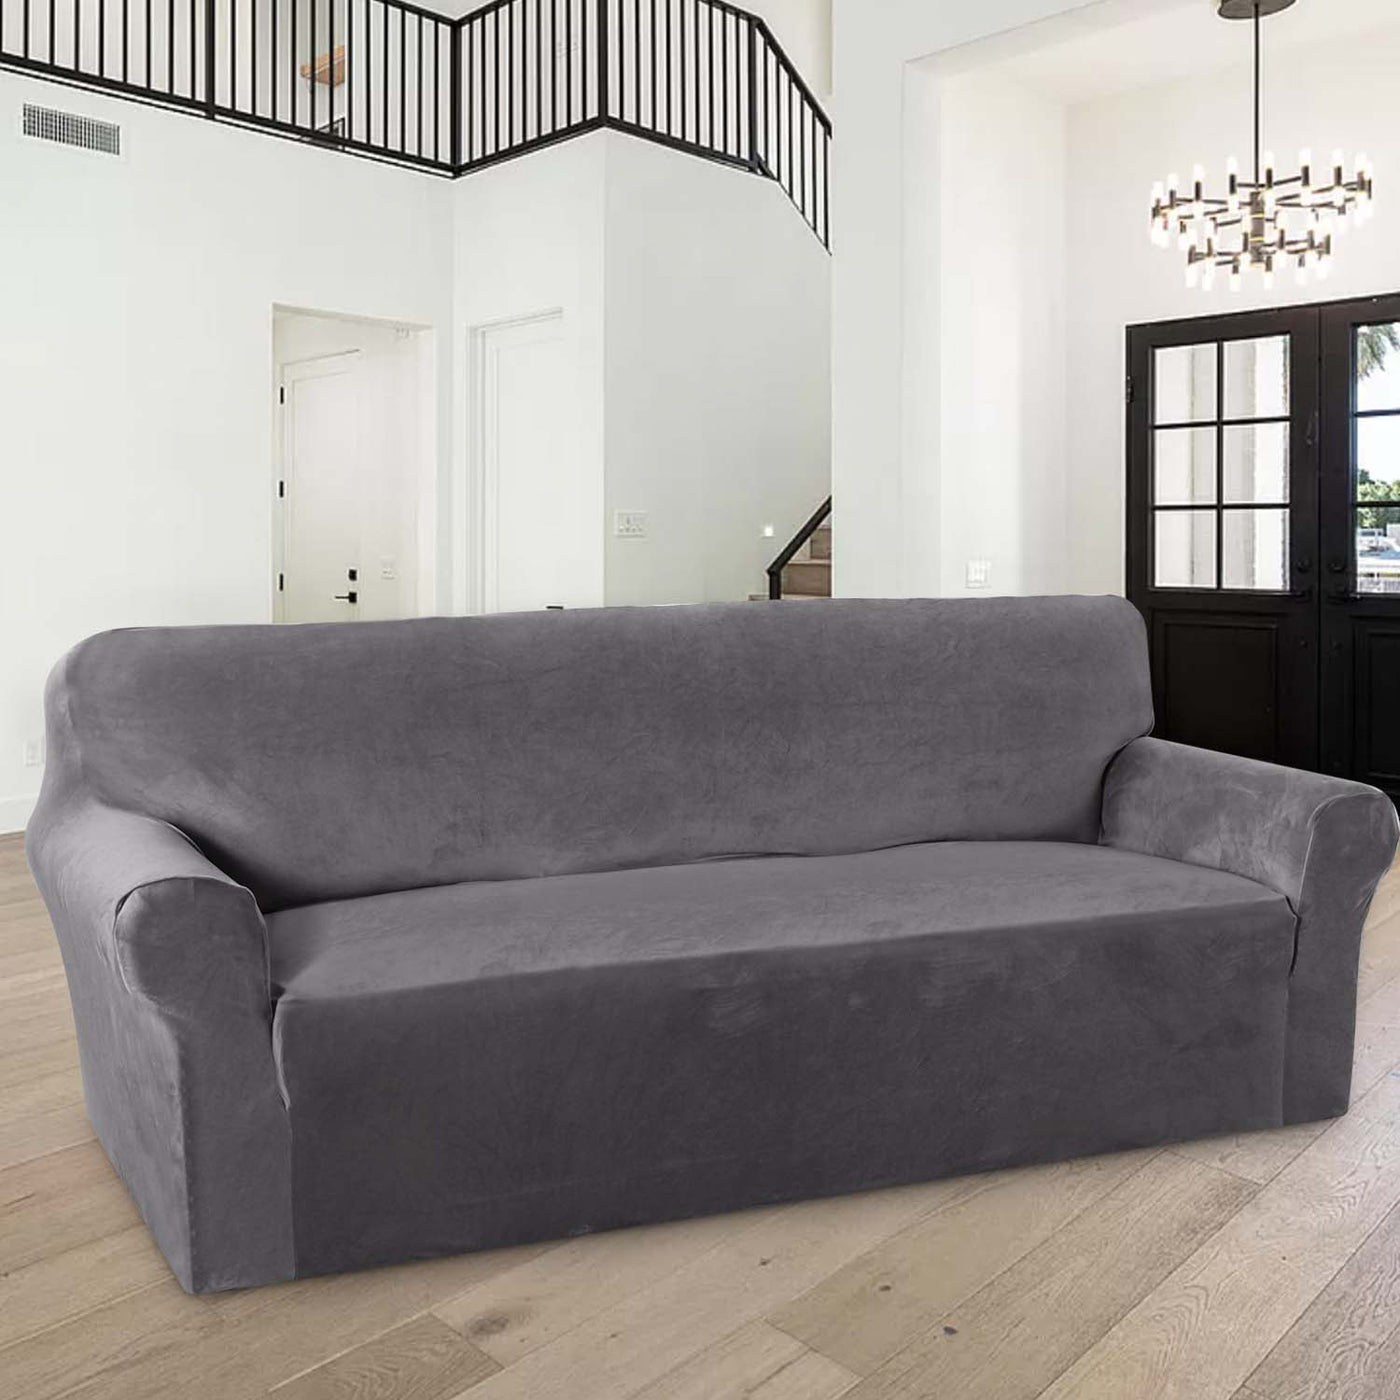 1-Piece Luxury Velvet 4 Seater Stretch Sofa Slipcover